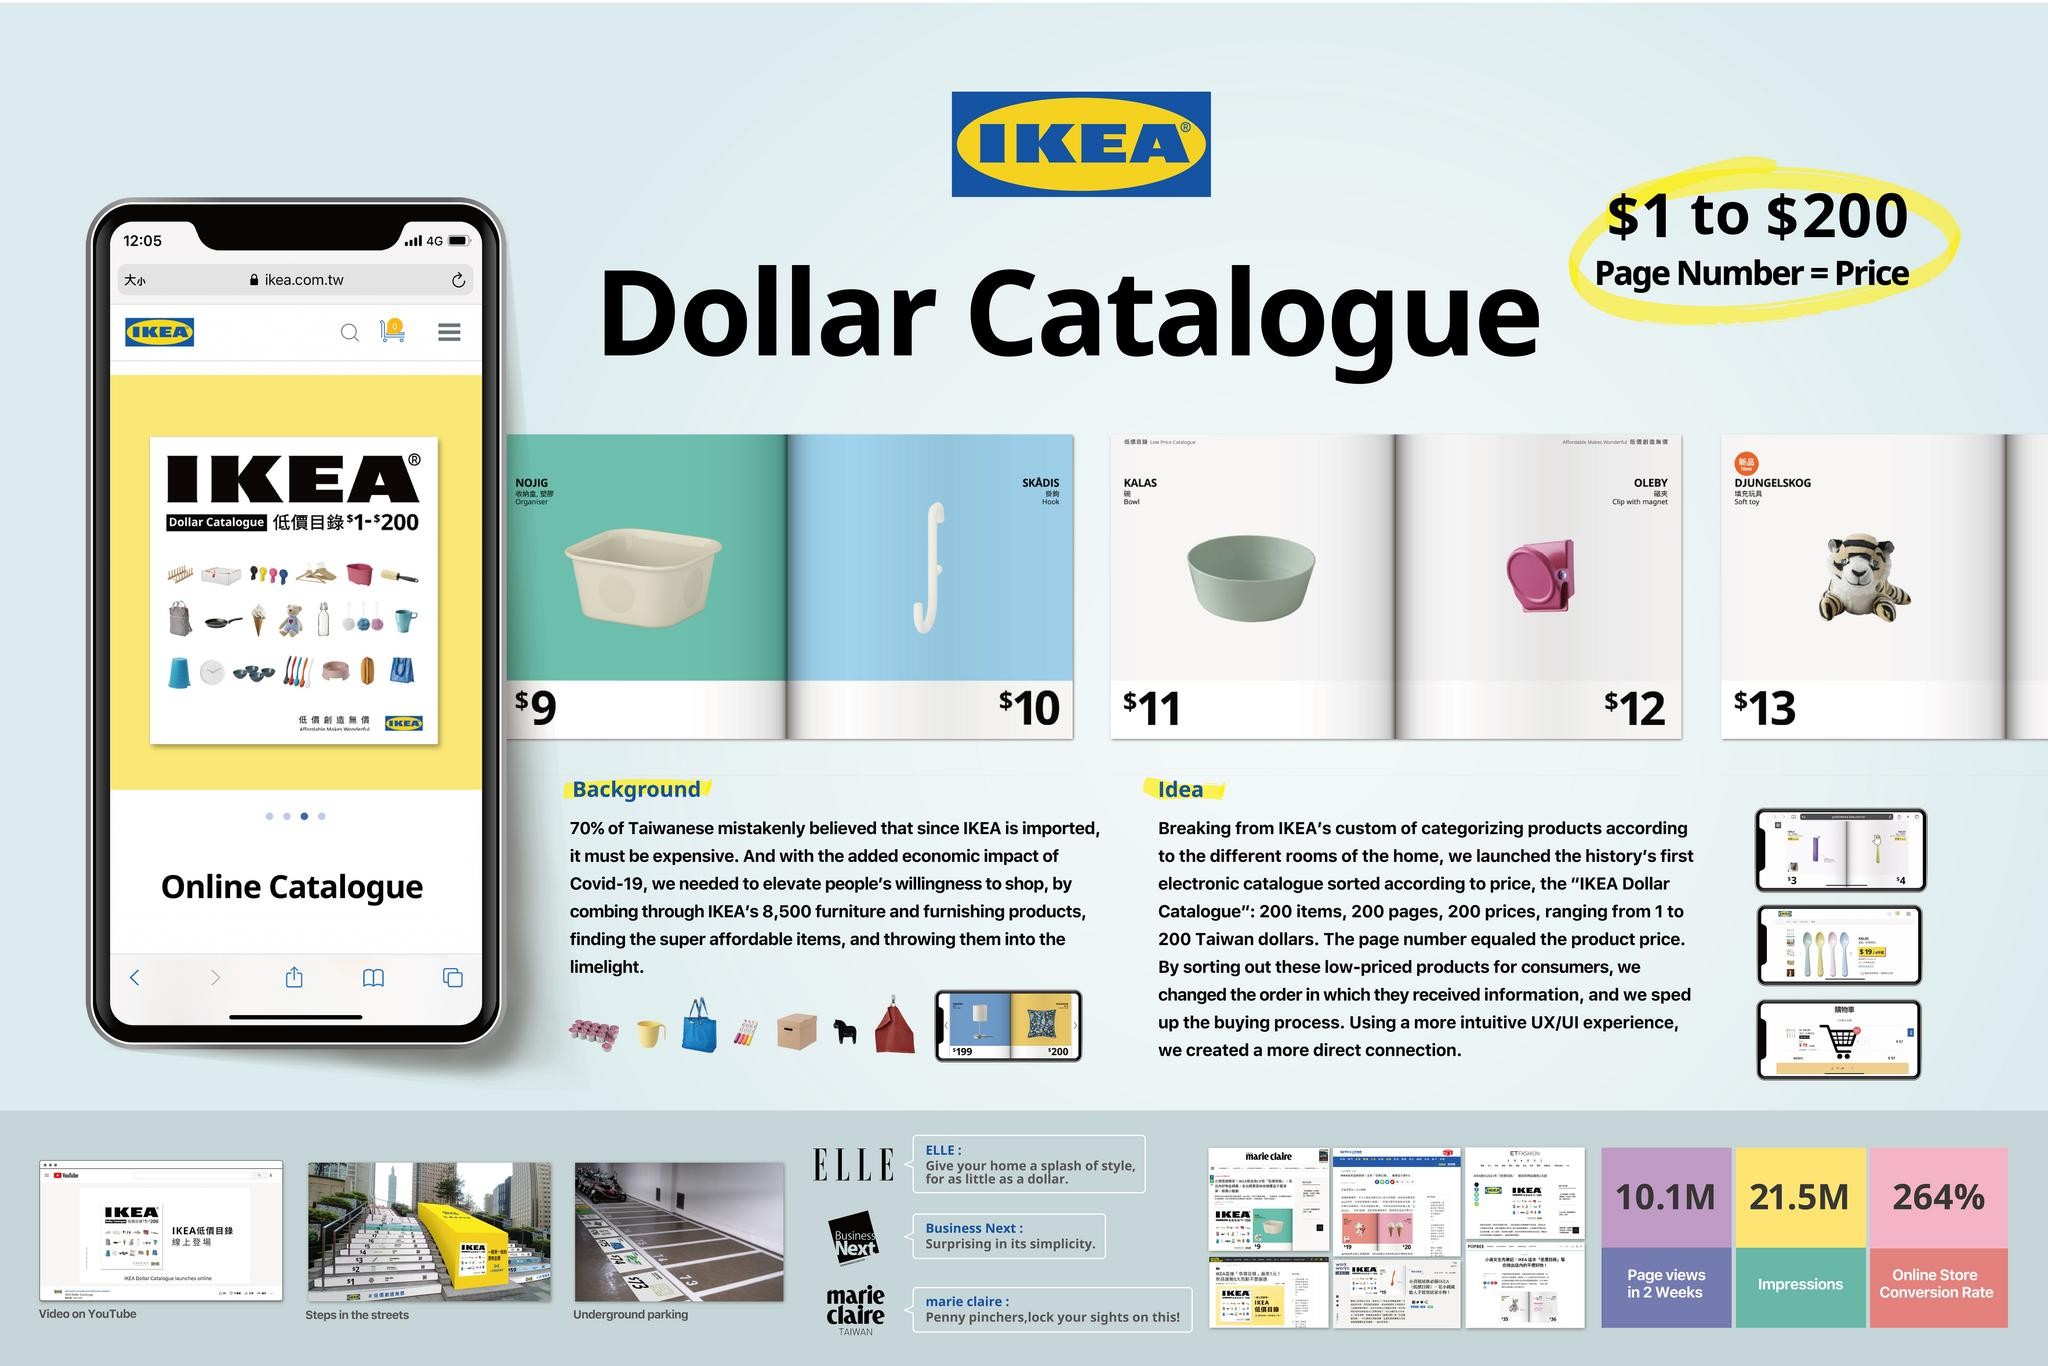 IKEA-Dollar Catalogue